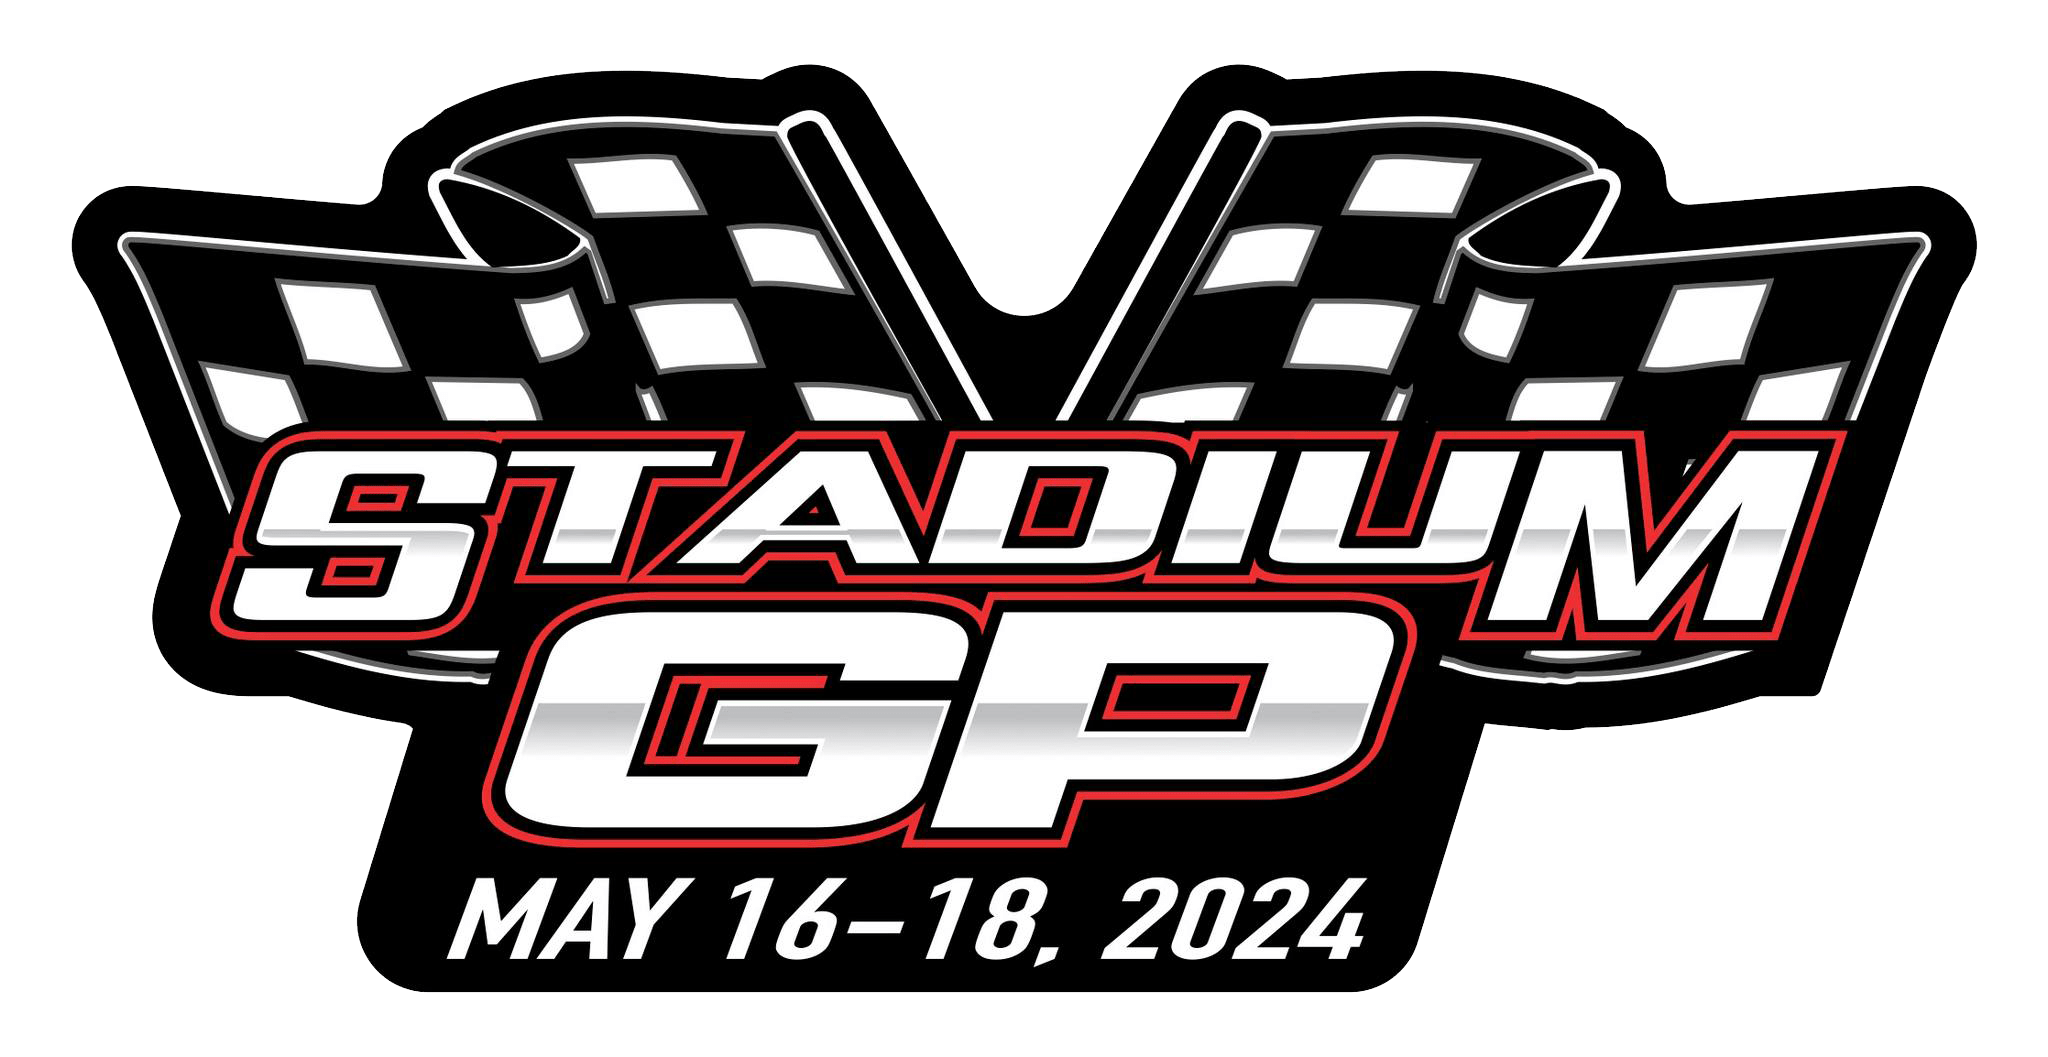 Stadium GP Logo with dates 5/16-5/18